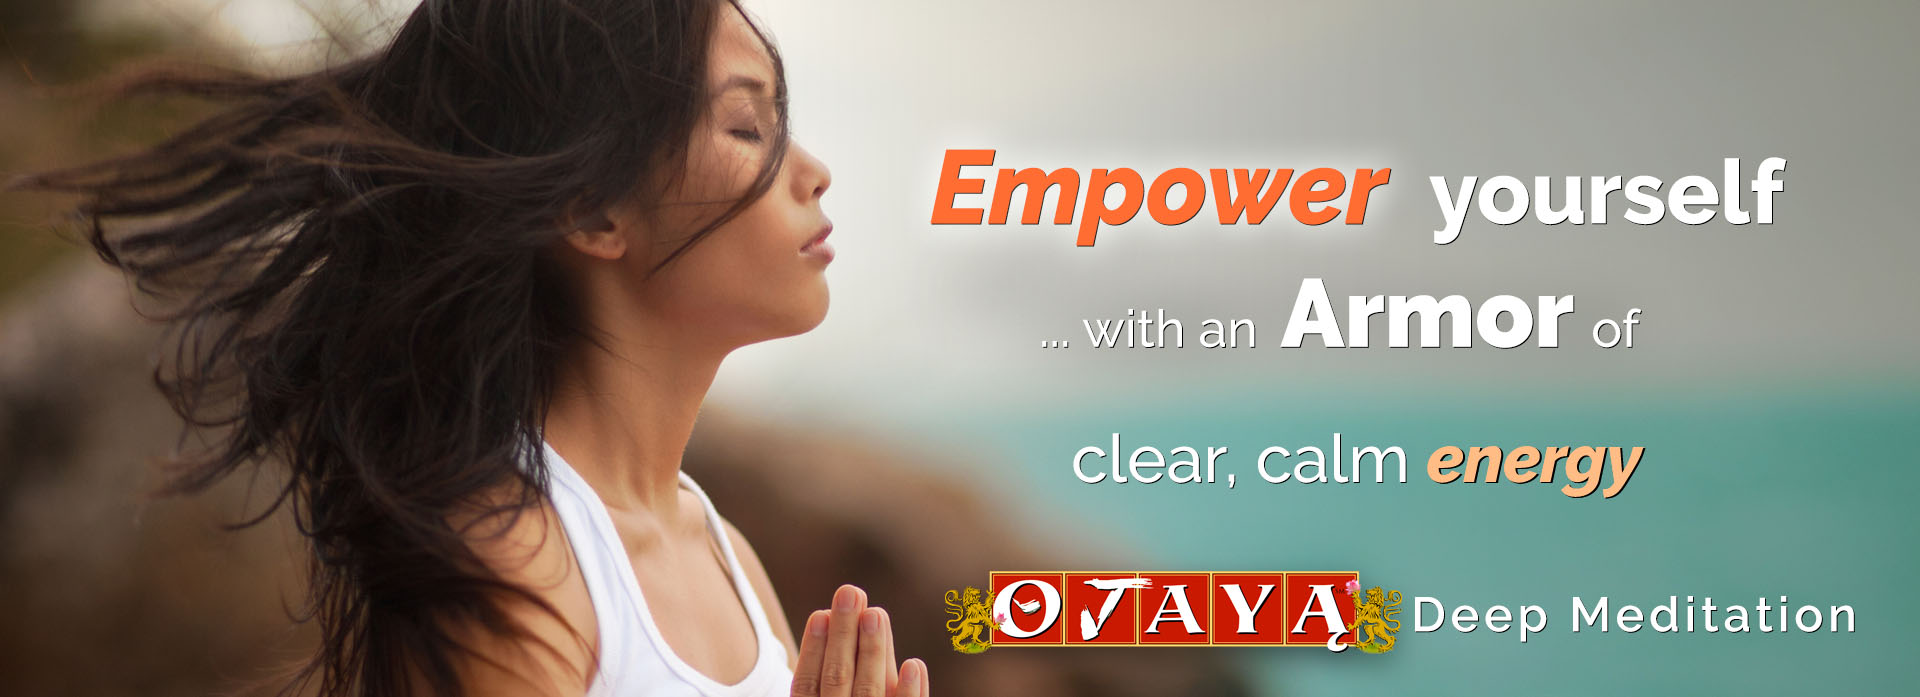 OJAYA Deep Meditation: Empower Yourself with Clear, Calm Energy